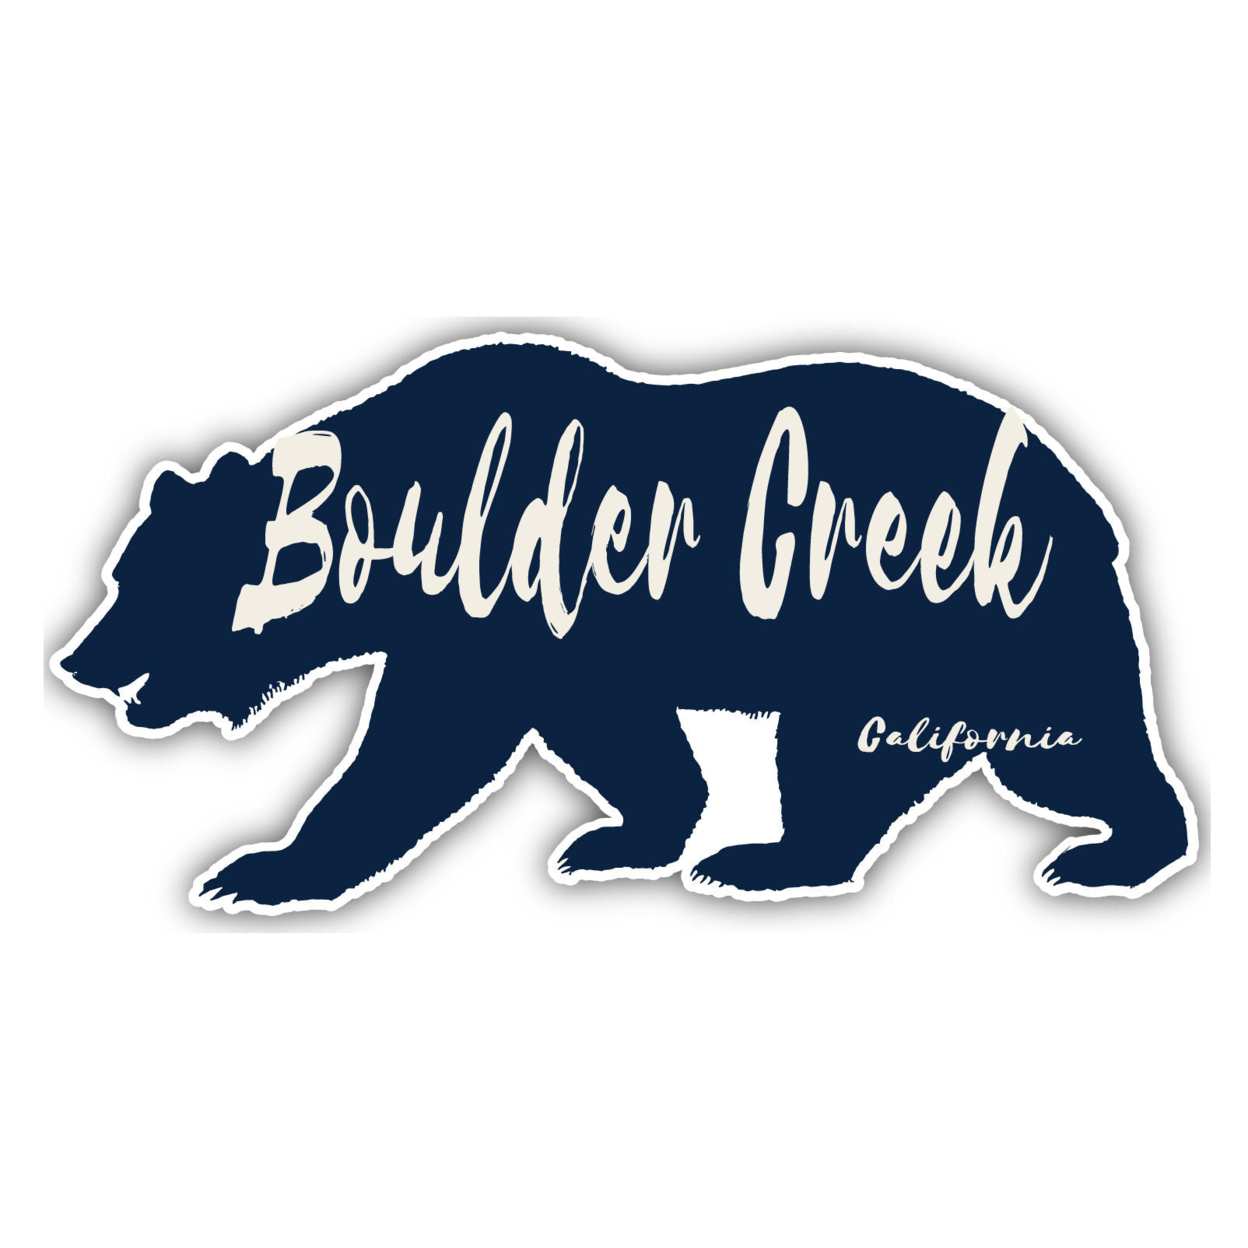 Boulder Creek California Souvenir Decorative Stickers (Choose Theme And Size) - 4-Pack, 6-Inch, Bear